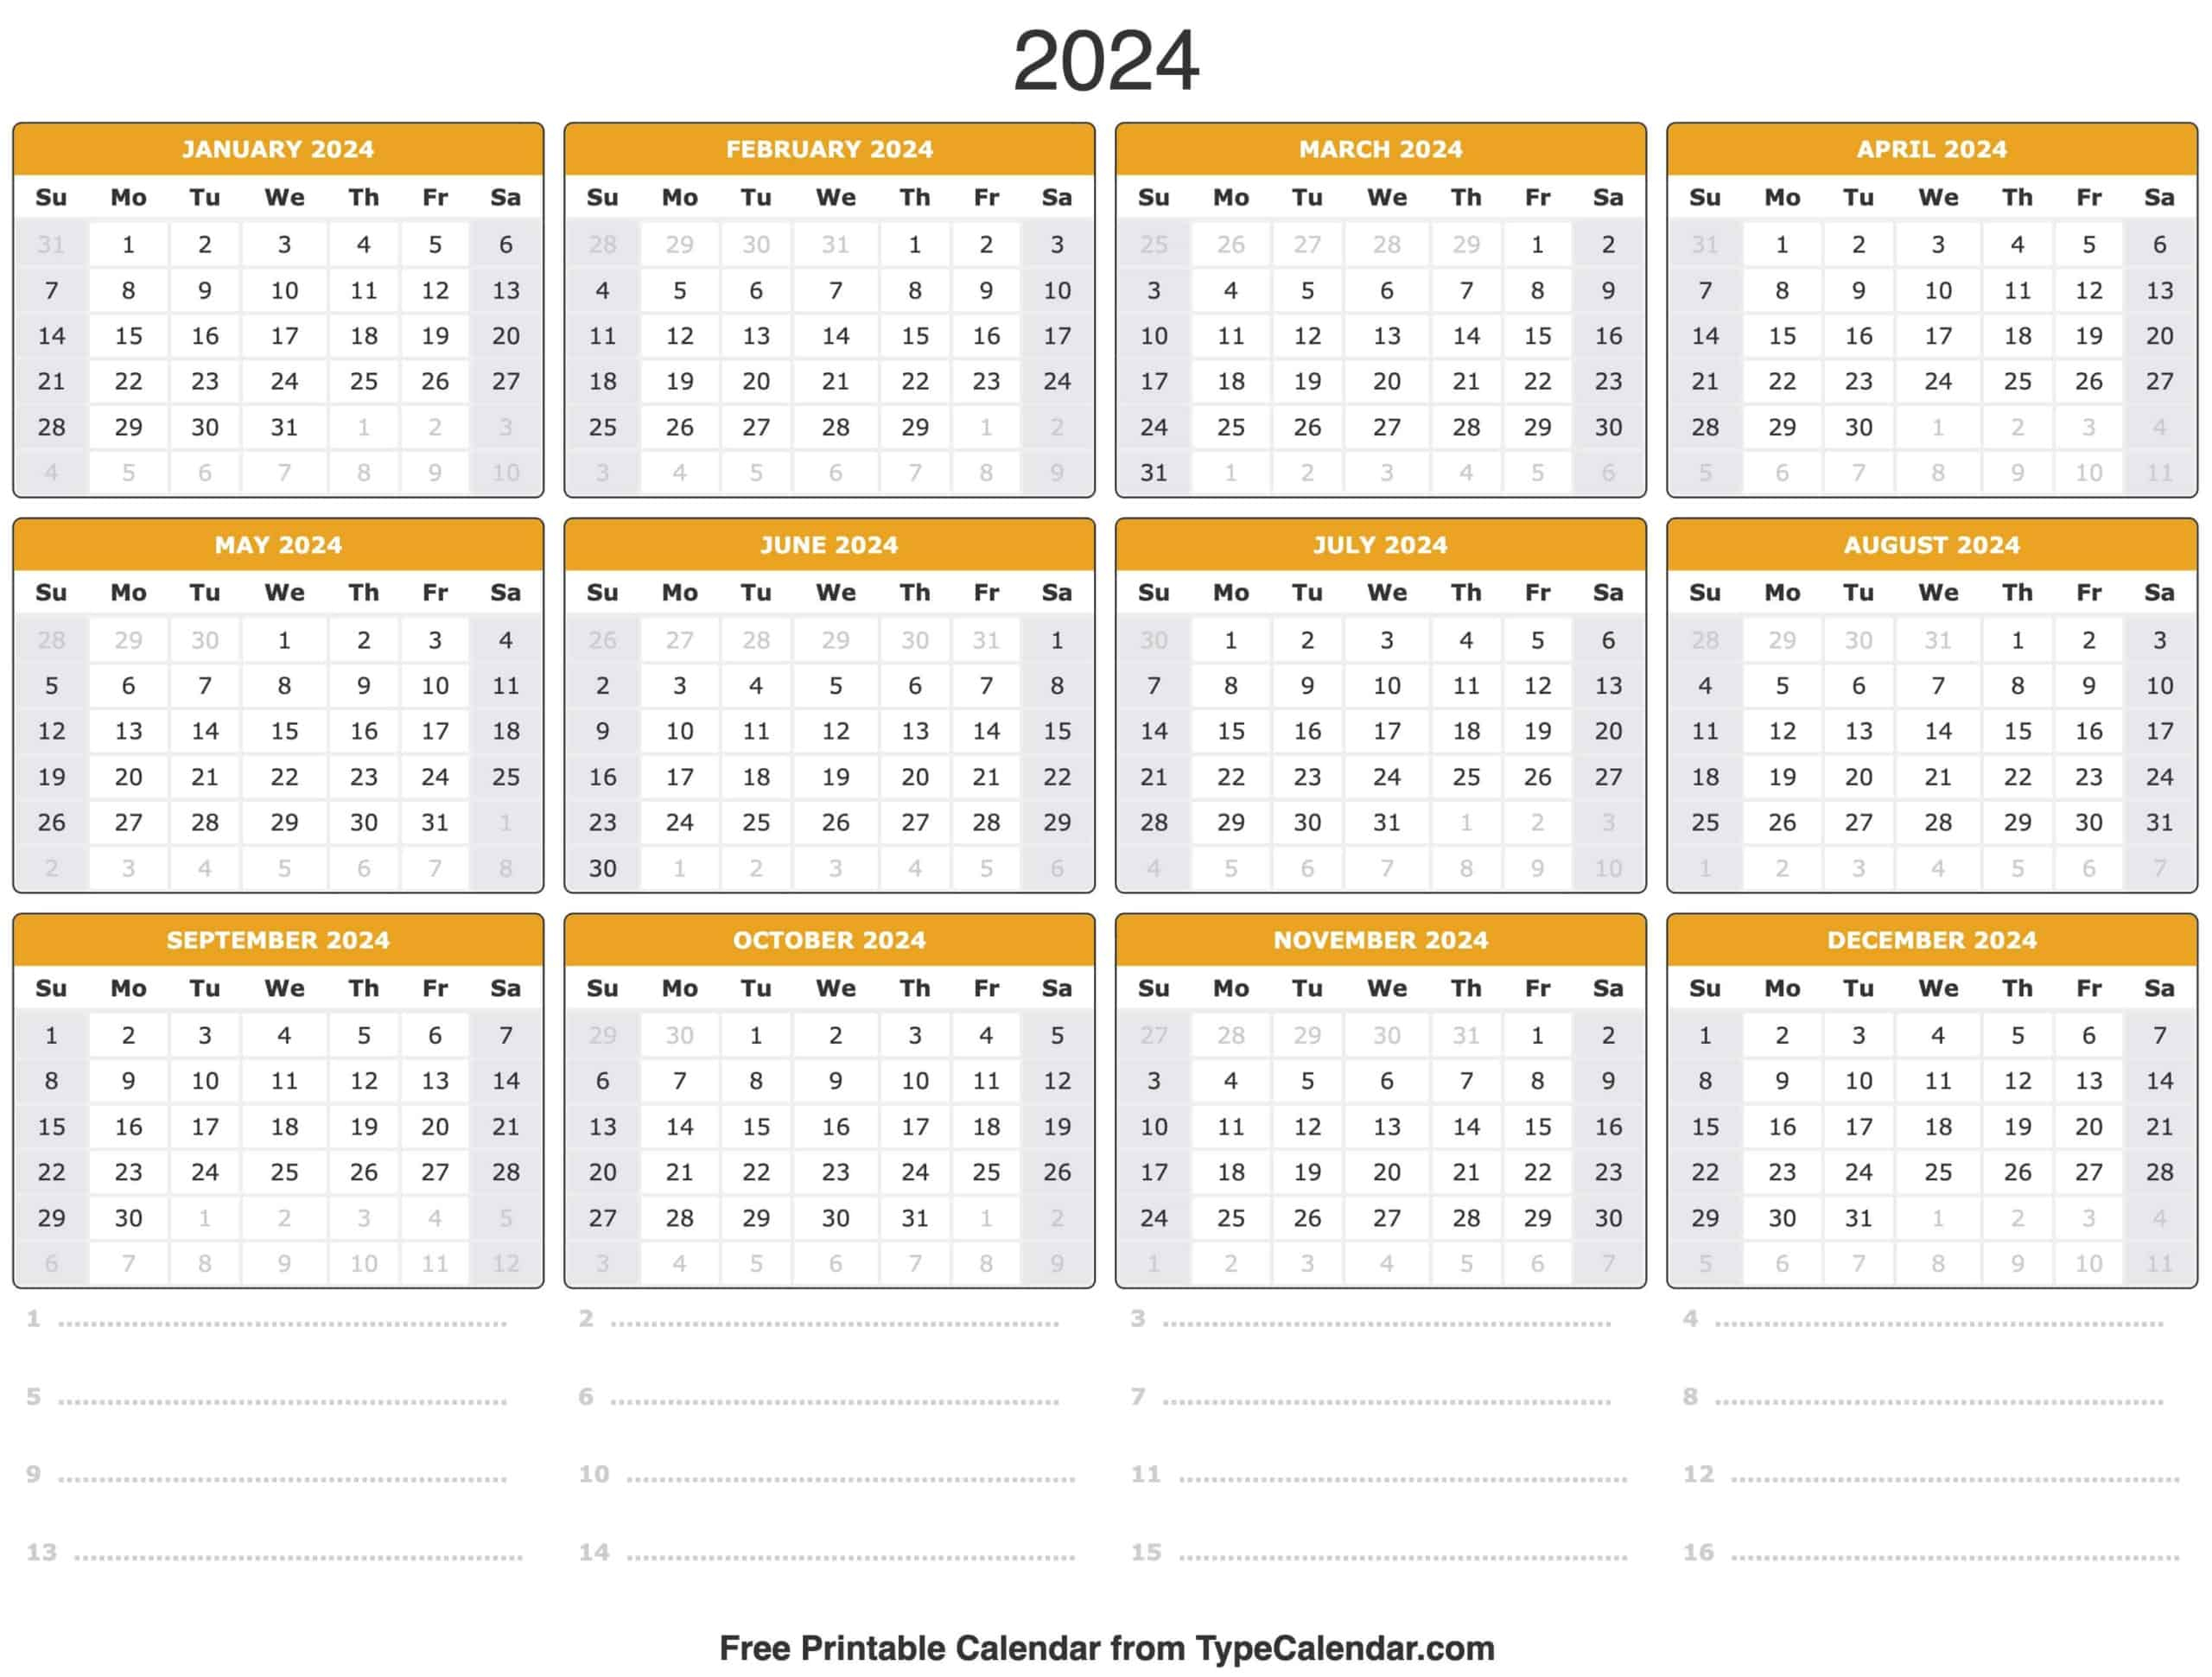 2024 Calendar: Free Printable Calendar With Holidays | Yearly Event Calendar Template 2024